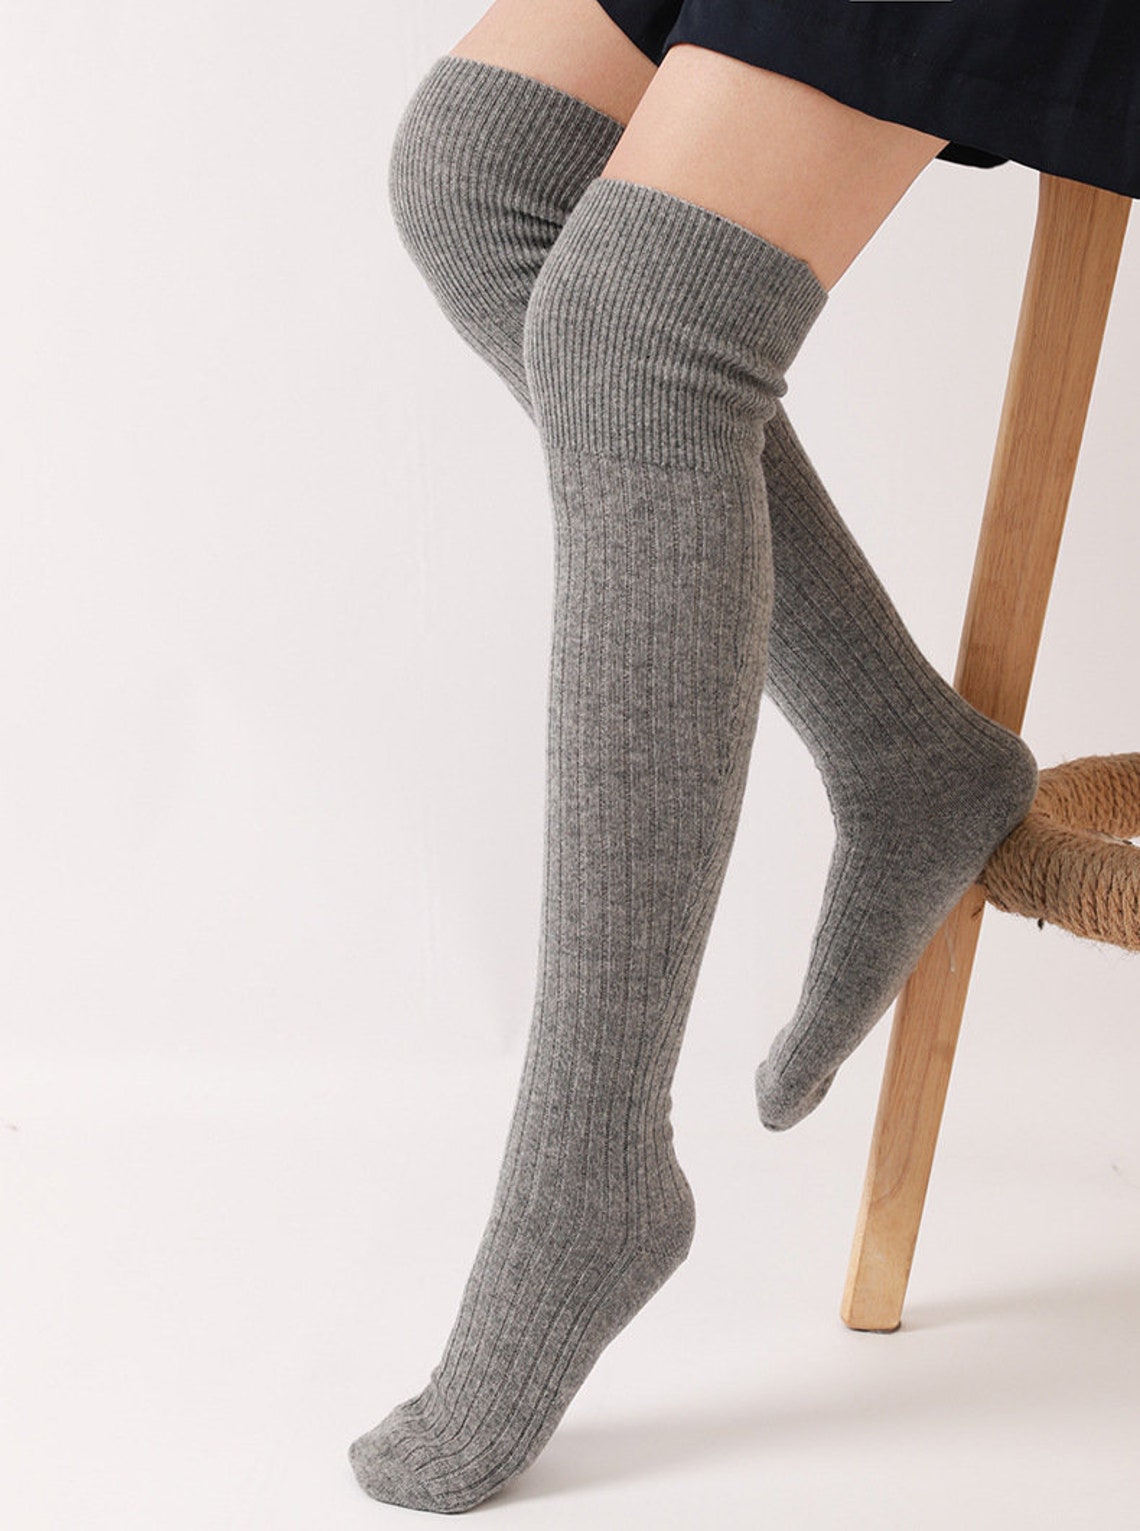 100% CASHMERE SOCKS. Luxury Socks. Cashmere stockings Women. | Etsy